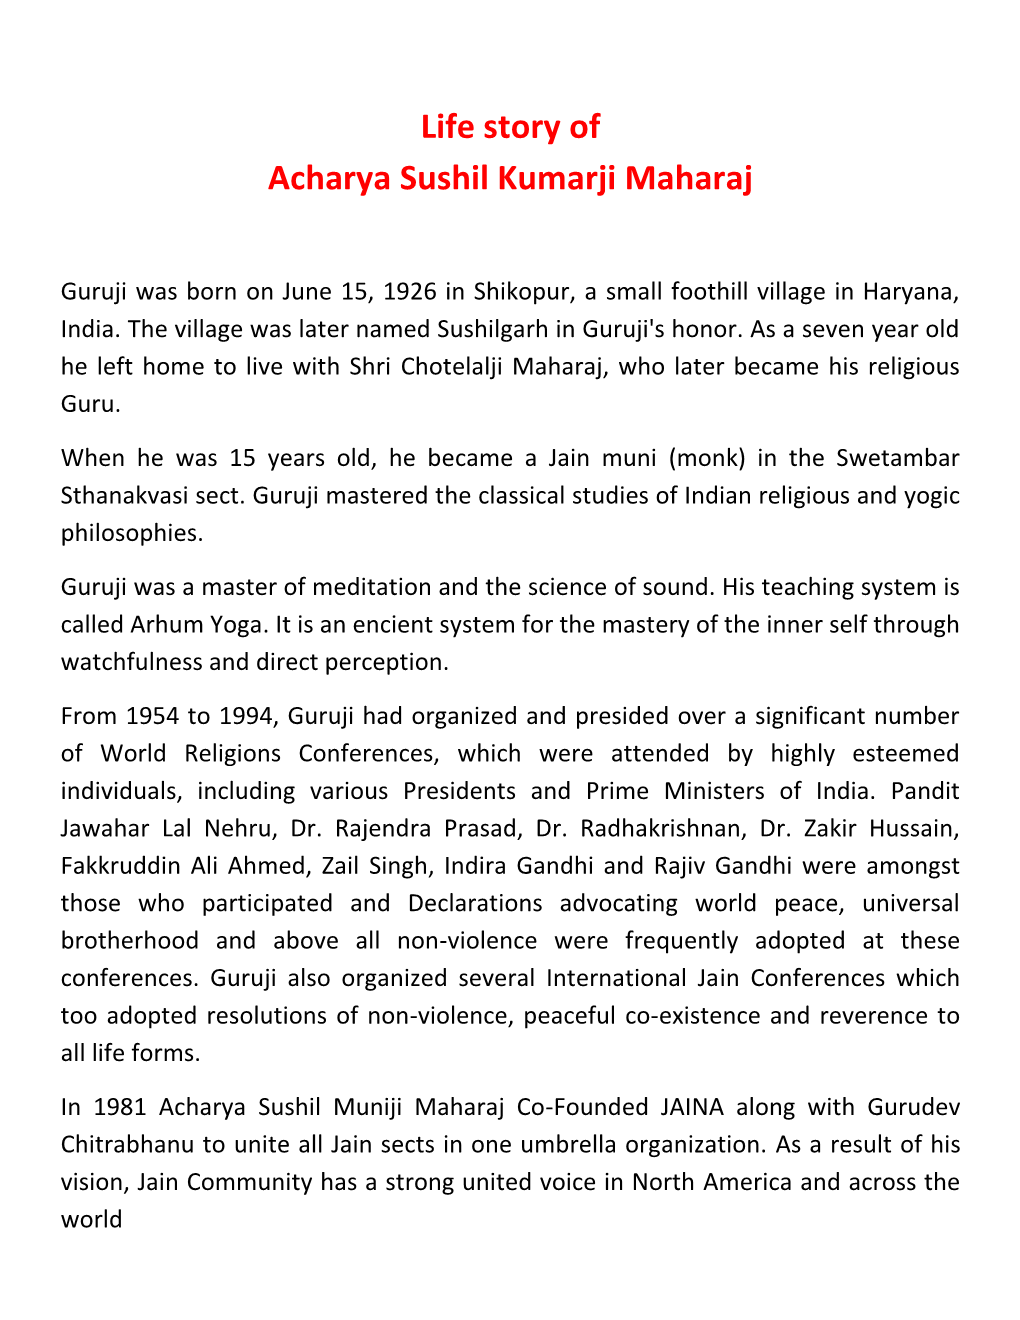 Life Story of Acharya Sushil Kumarji Maharaj